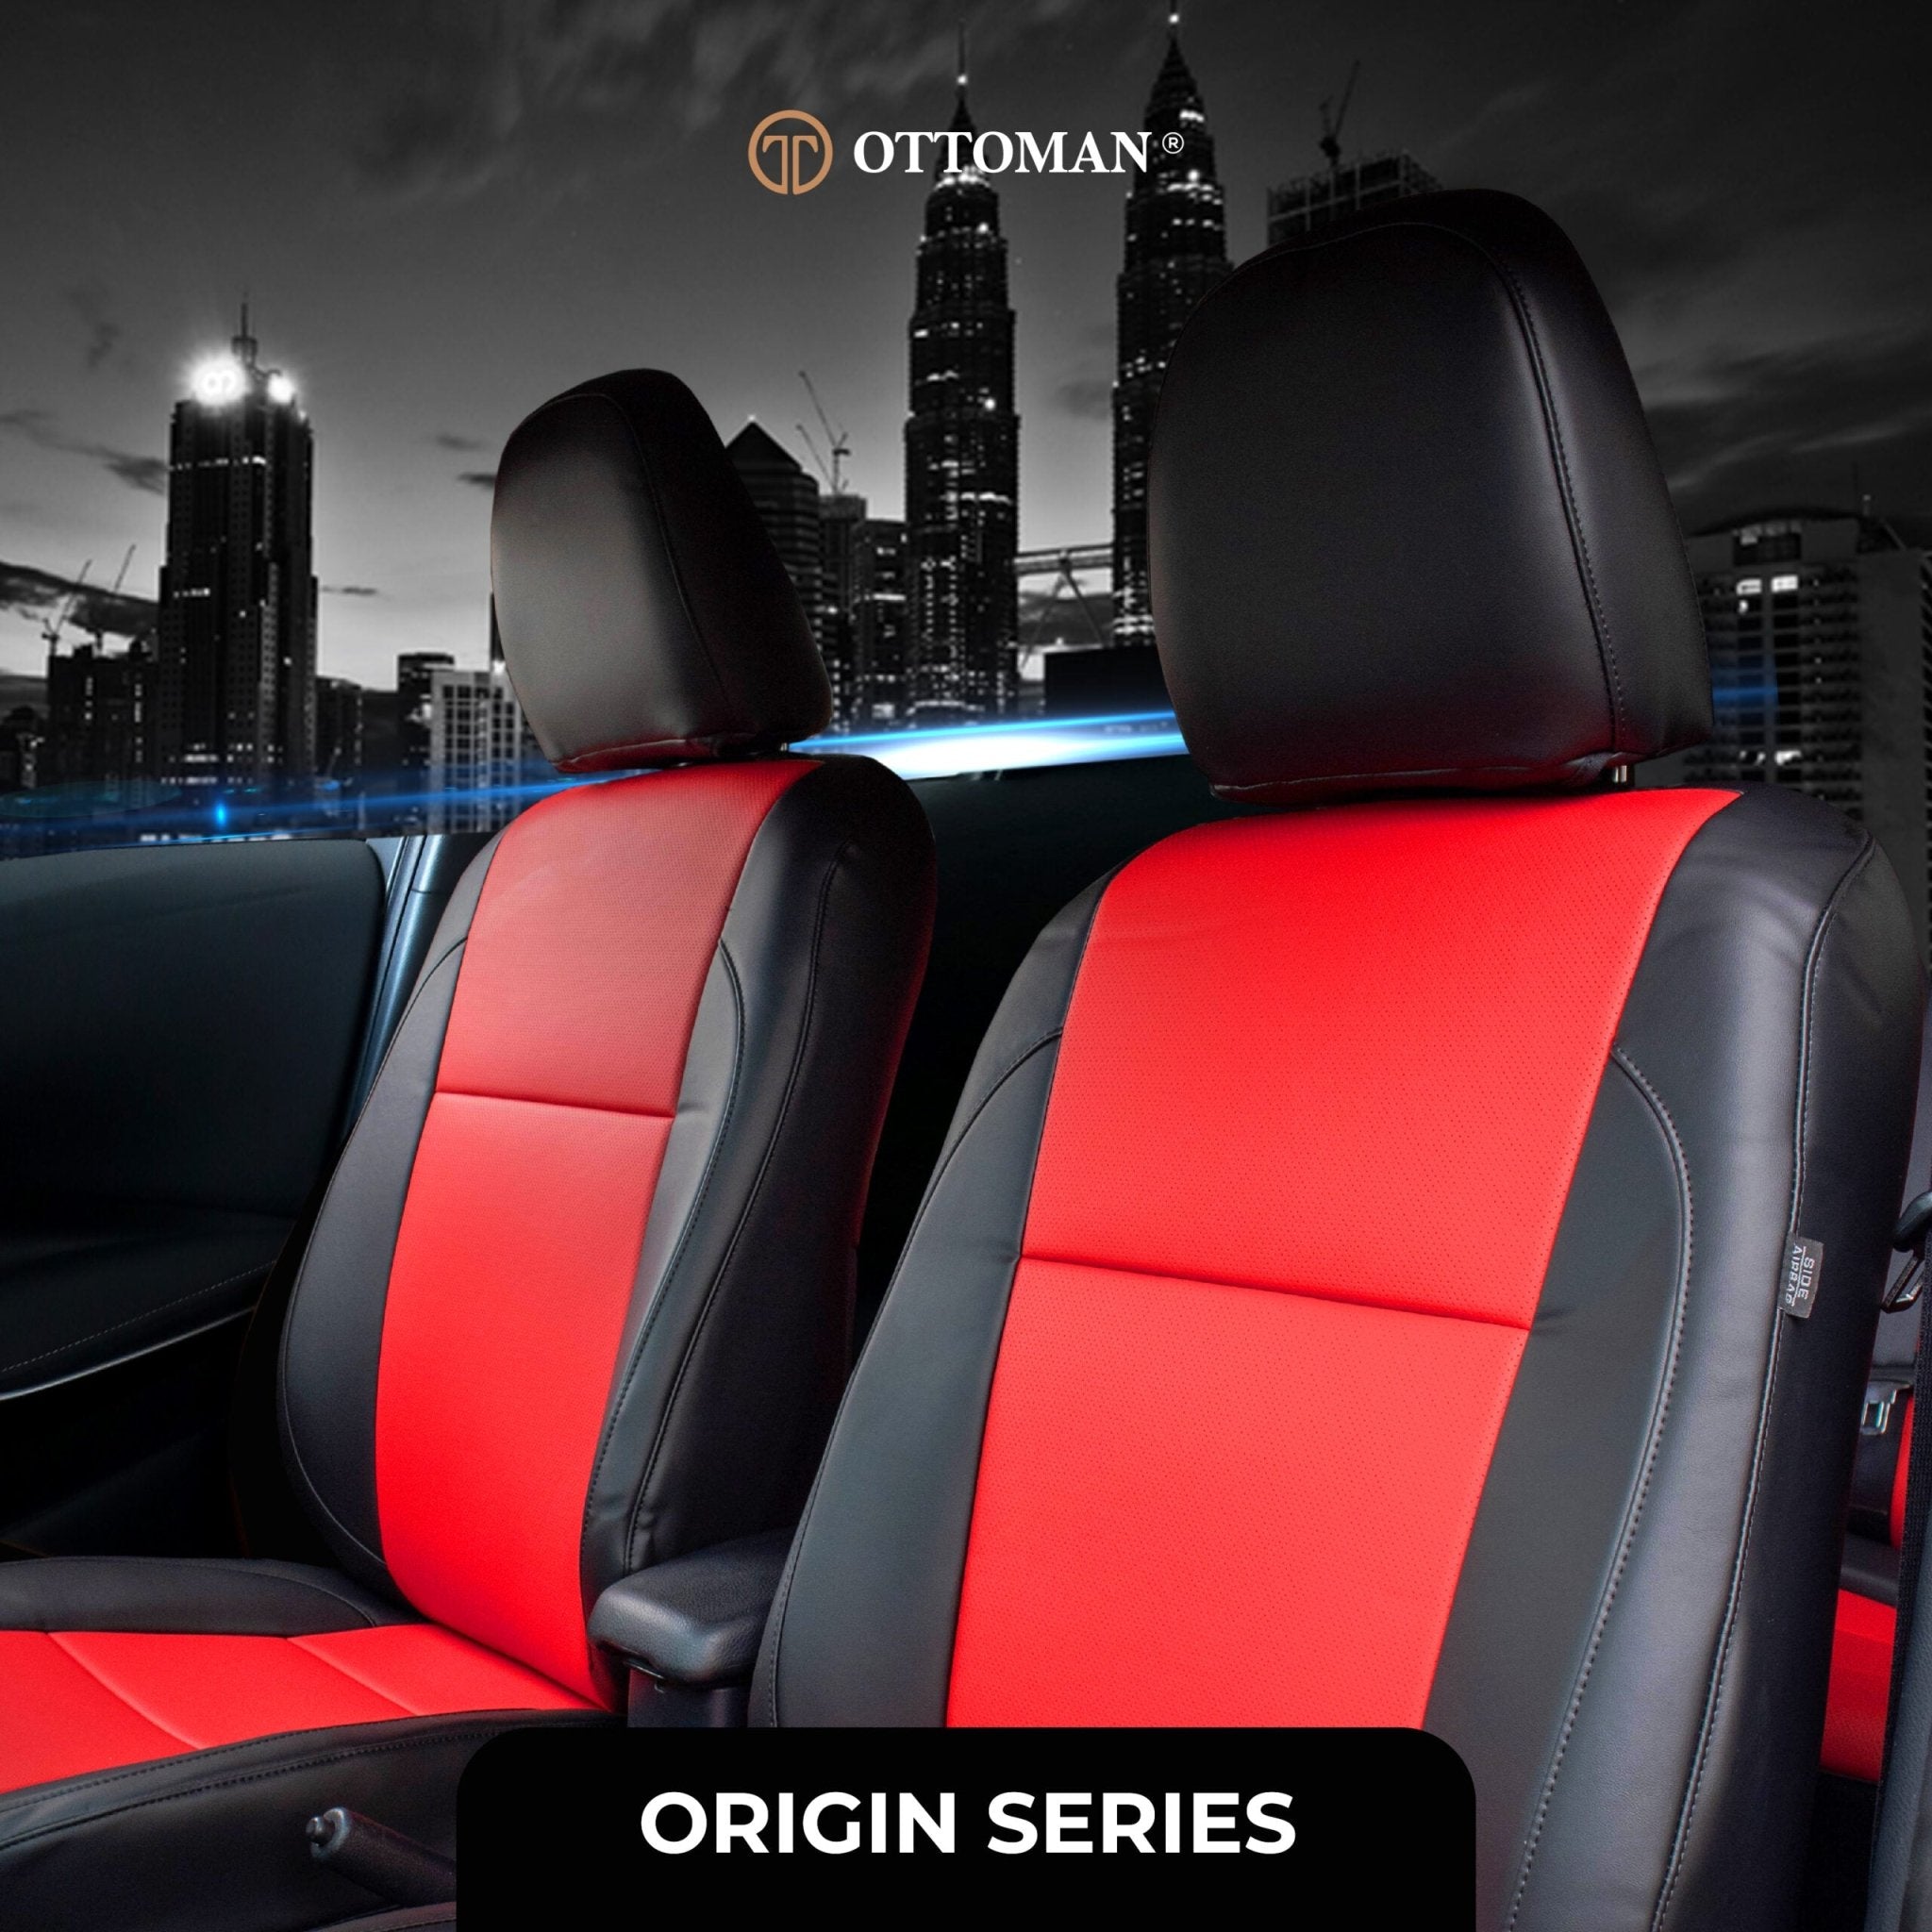 Kia-Naza Sportage QL (2016-2021) Ottoman Seat Cover Seat Cover in Klang Selangor, Penang, Johor Bahru - Ottoman Car Mats